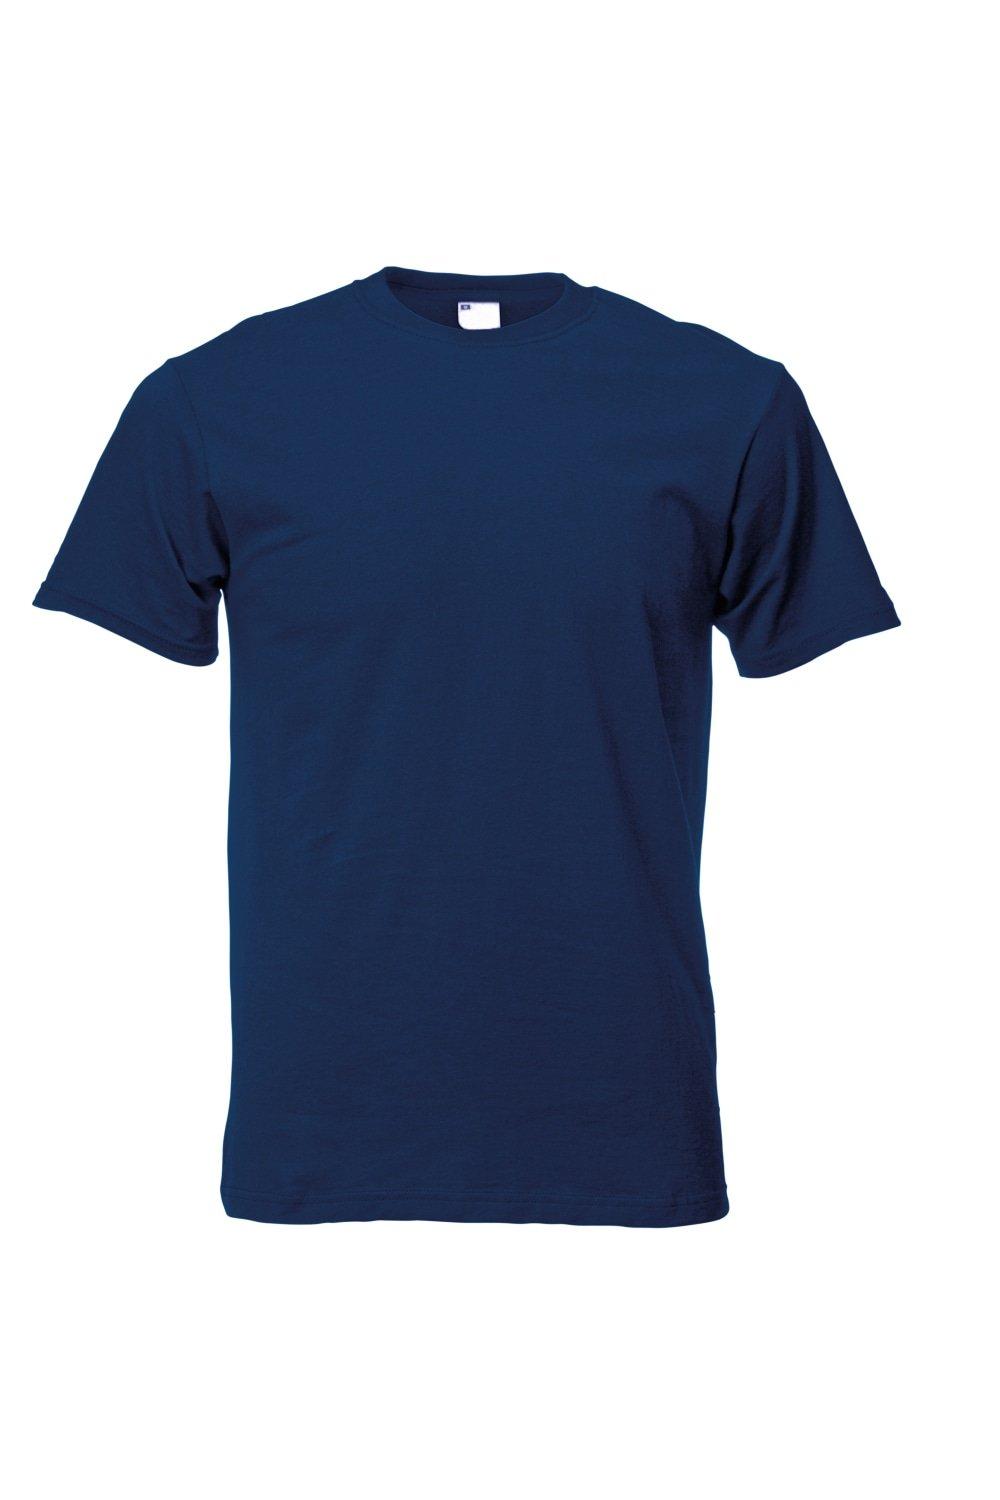 Повседневная футболка с коротким рукавом Universal Textiles, темно-синий